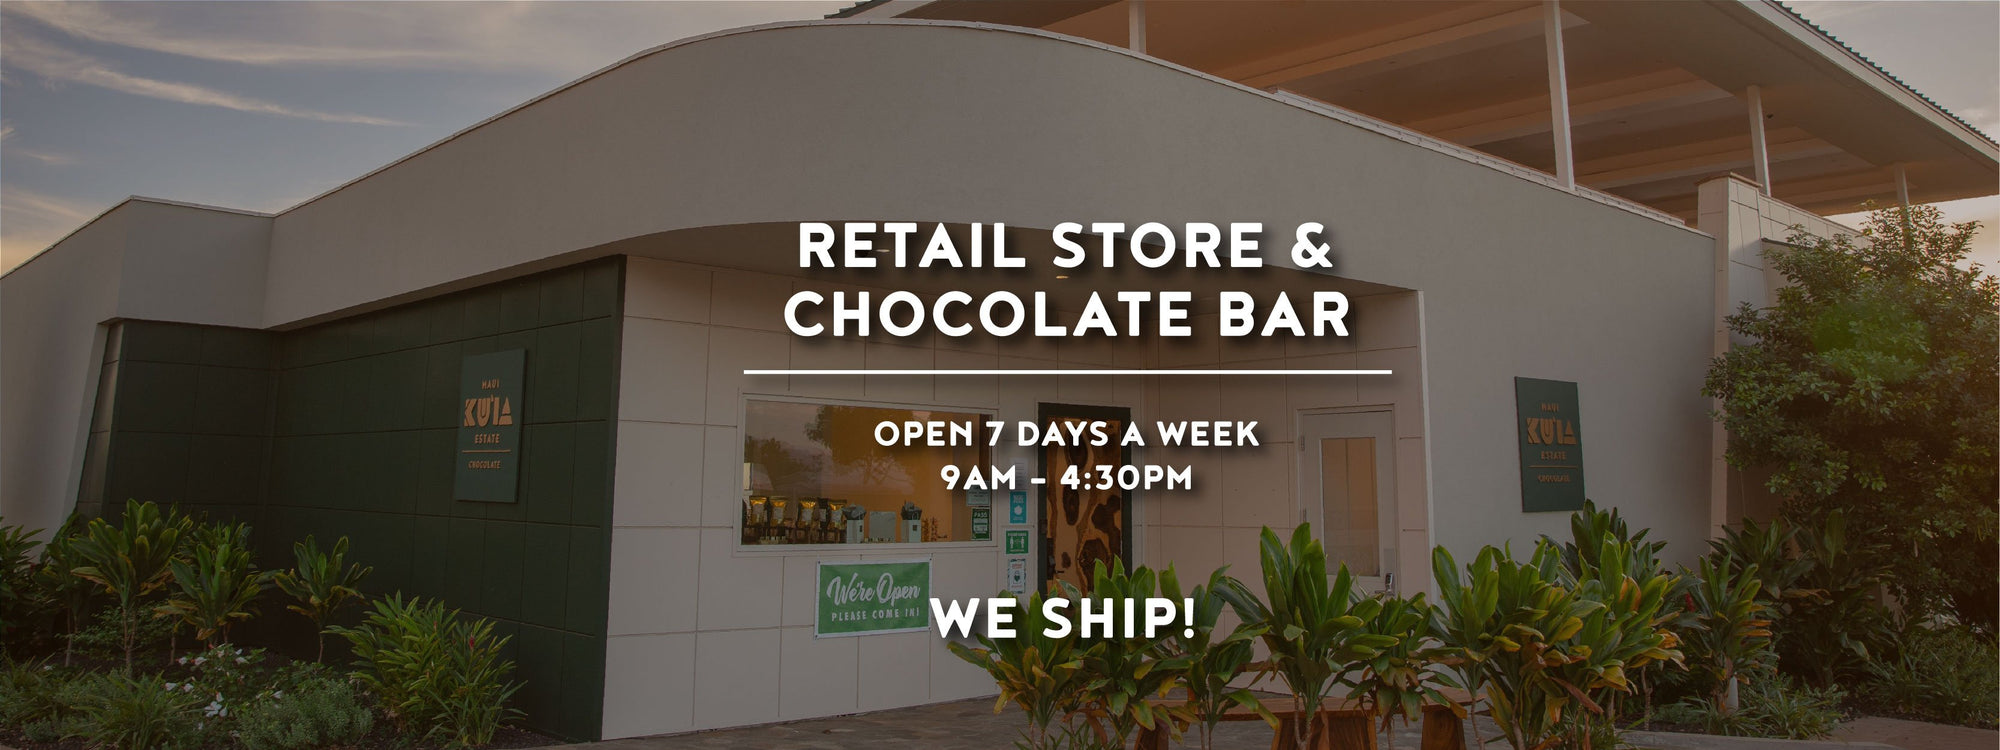 Weekend Happenings at the Chocolate Factory-Maui Kuʻia Estate Chocolate